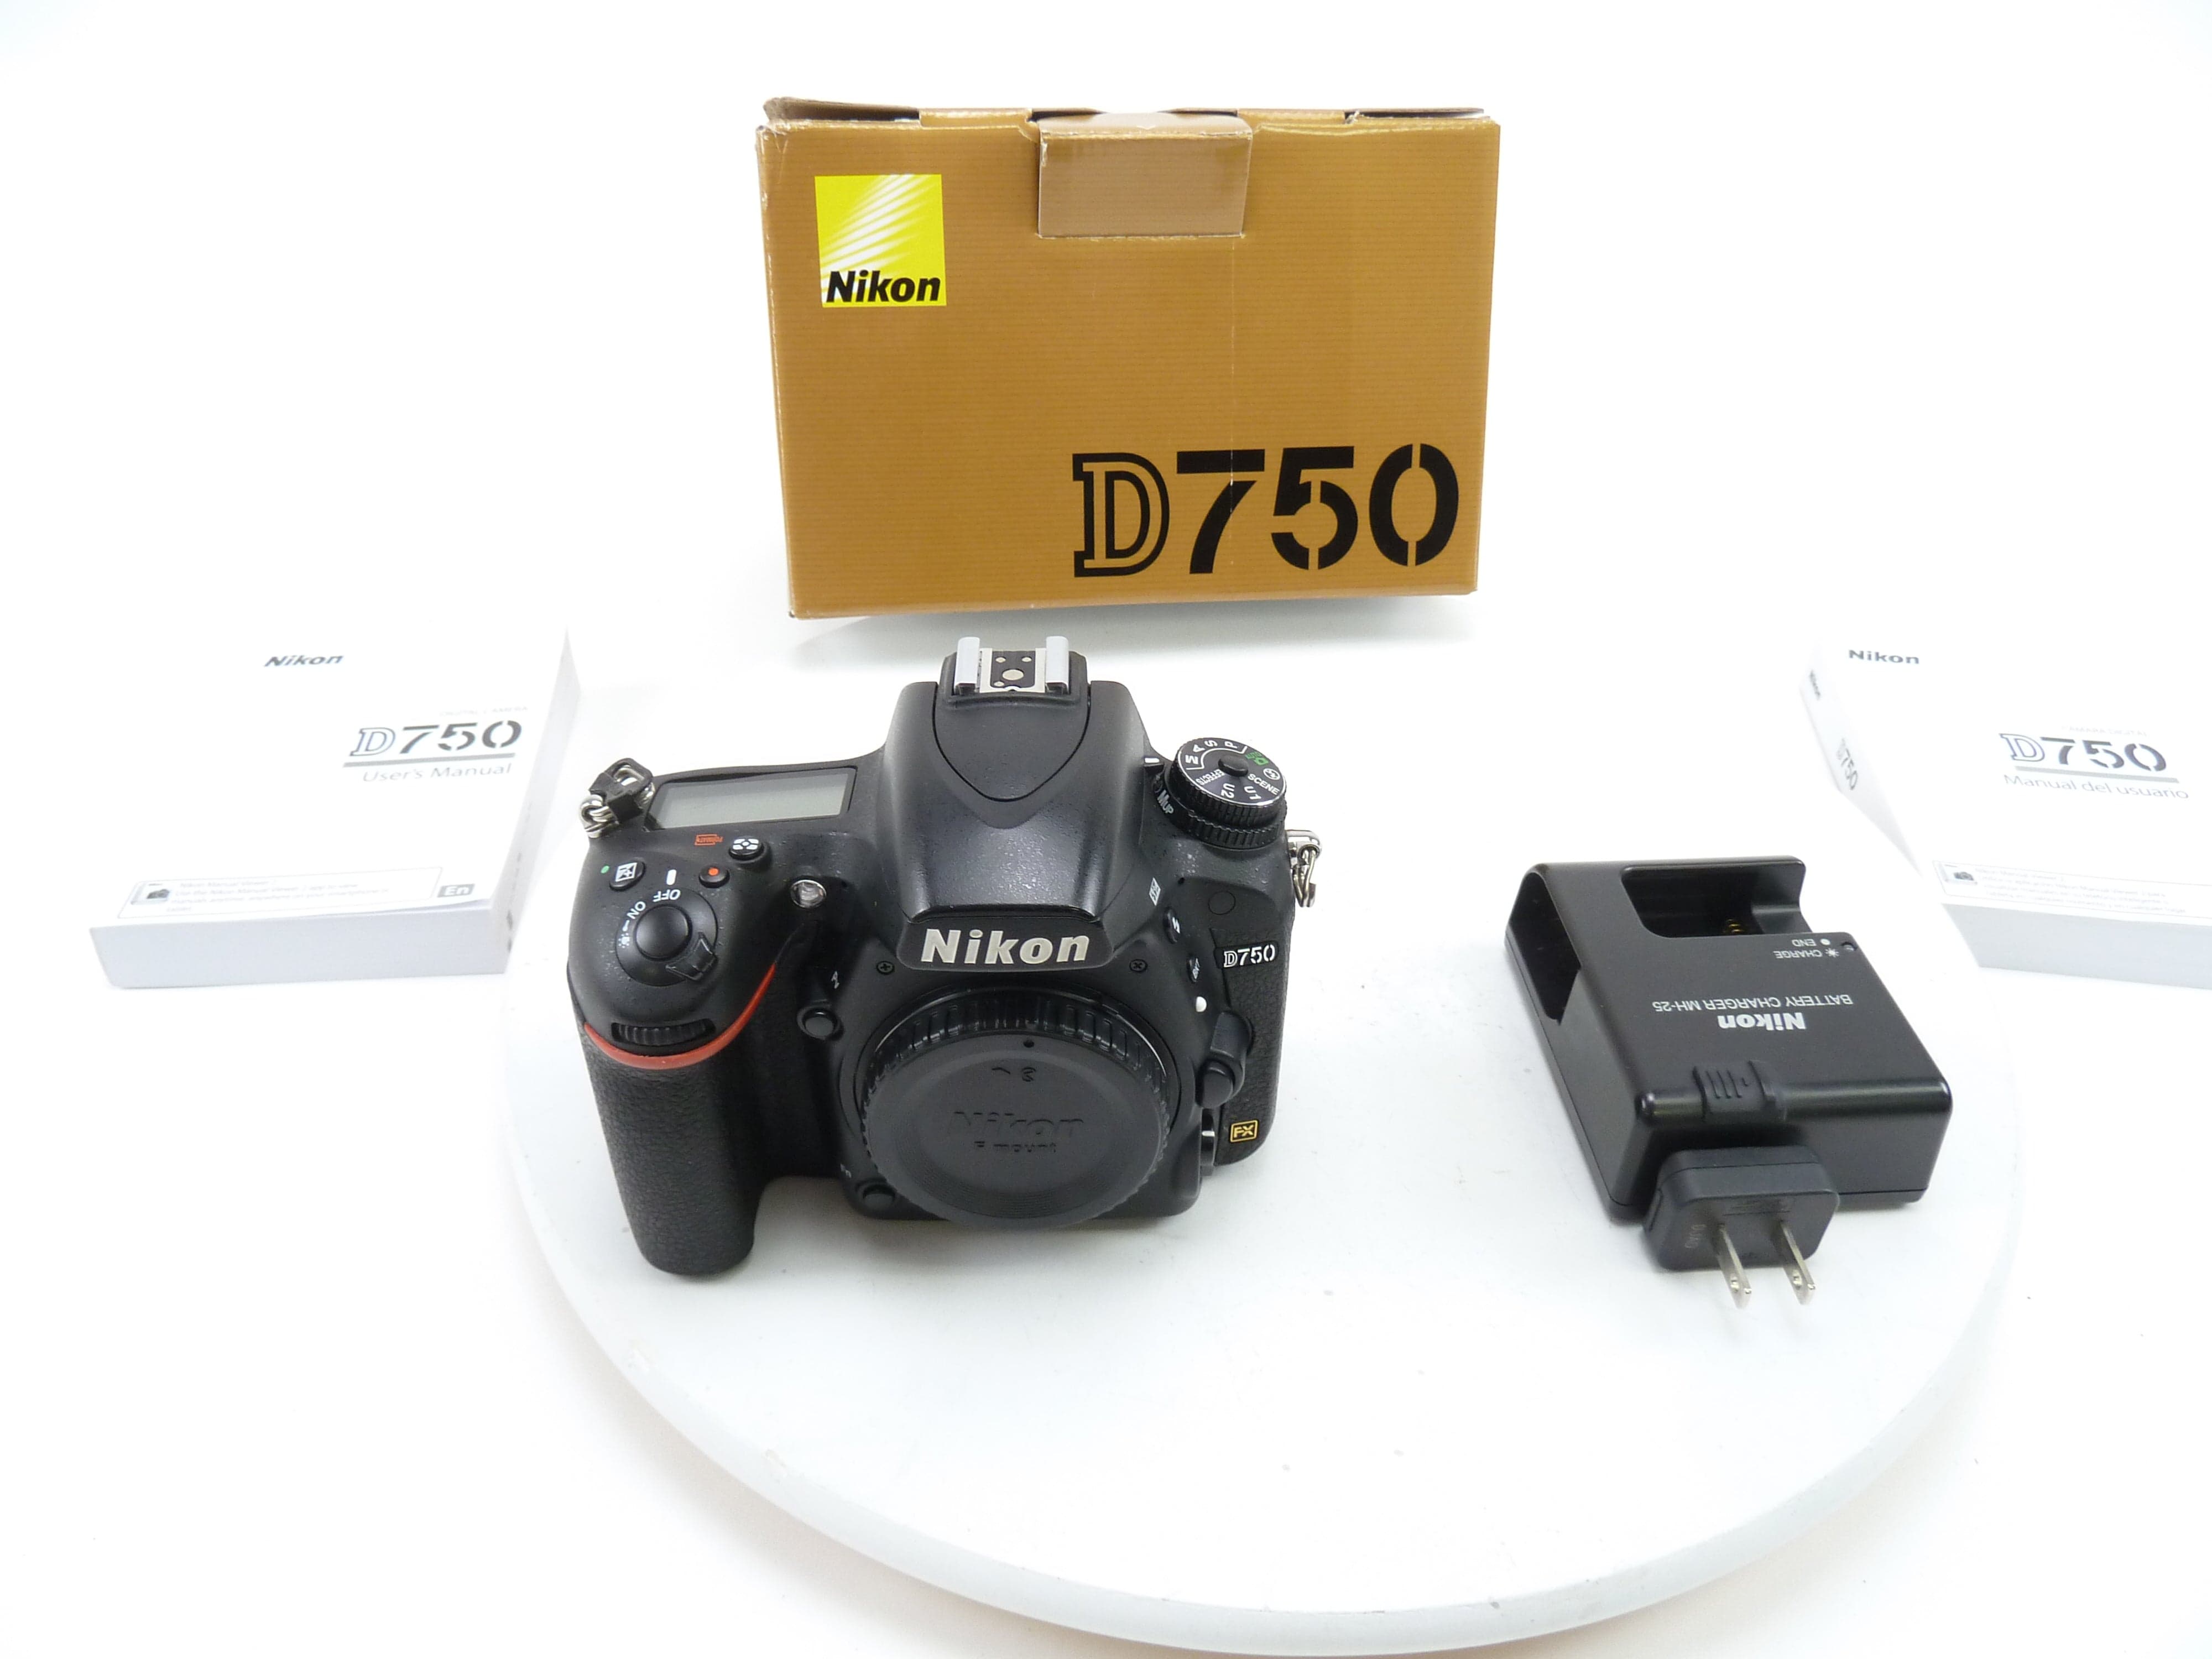 Premisse Vuiligheid Kiwi Nikon D750 Camera Body in box with shutter count of 138,968